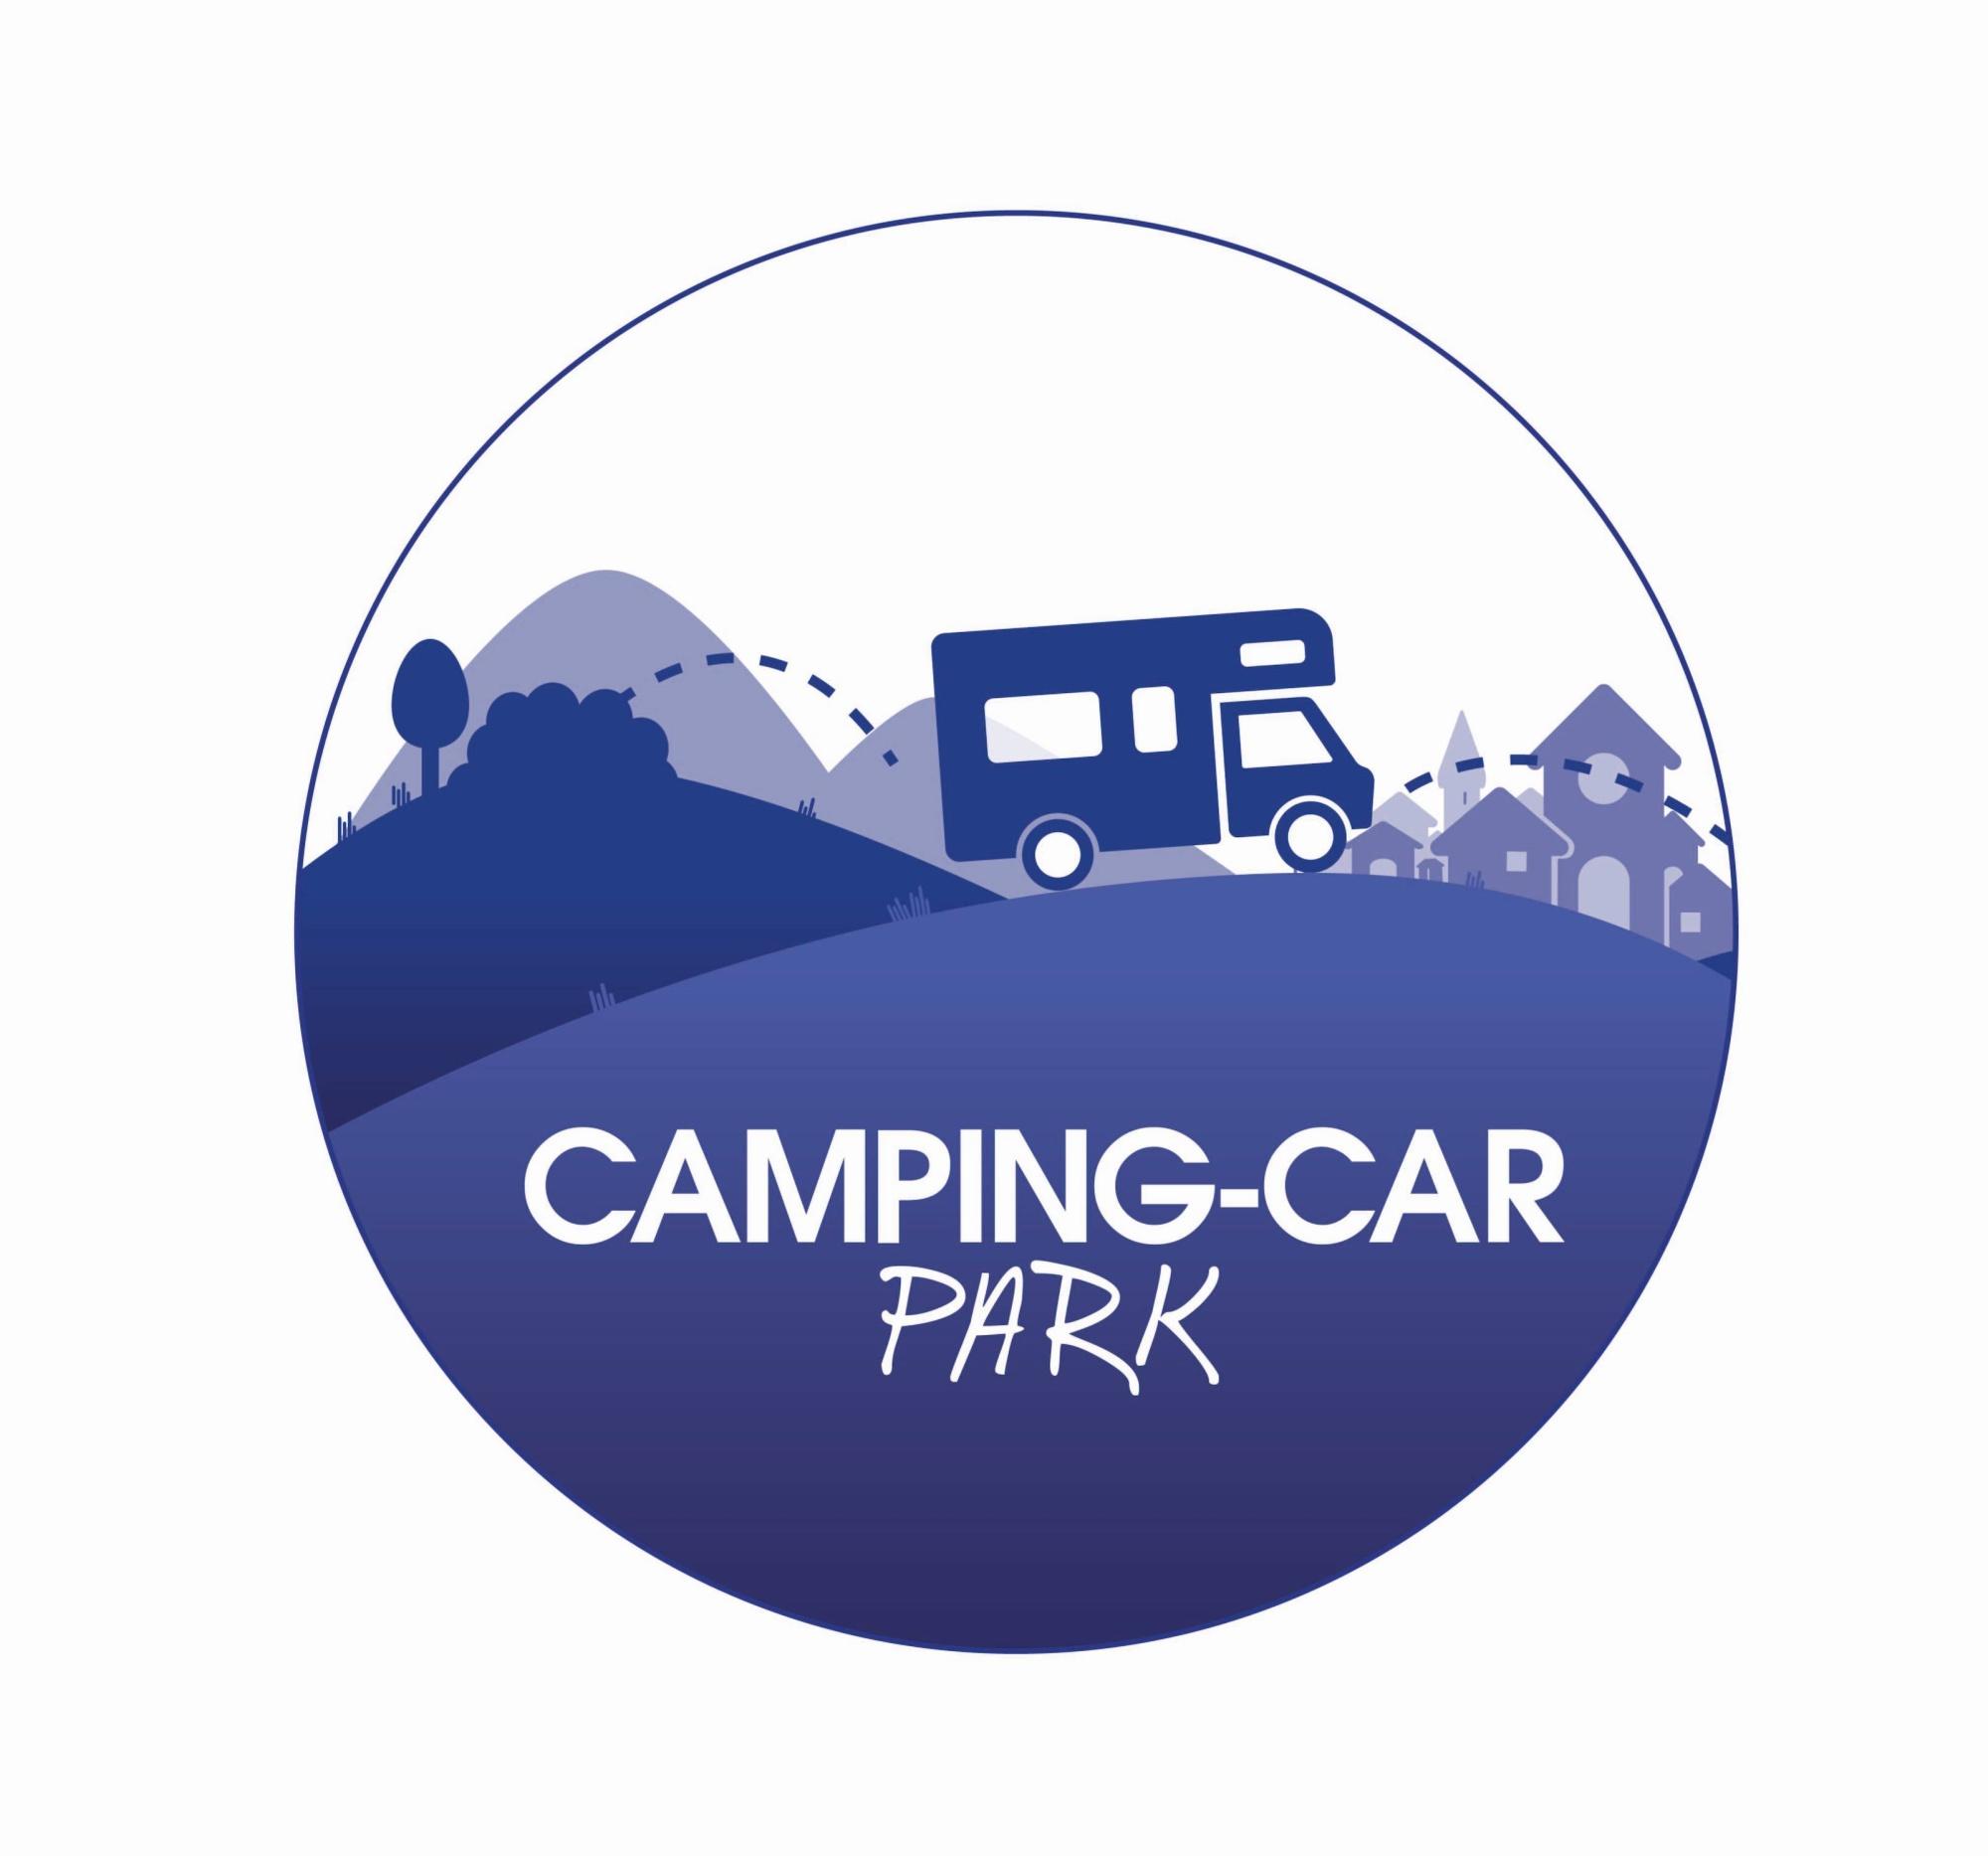 Camping-car Park Sallertaine